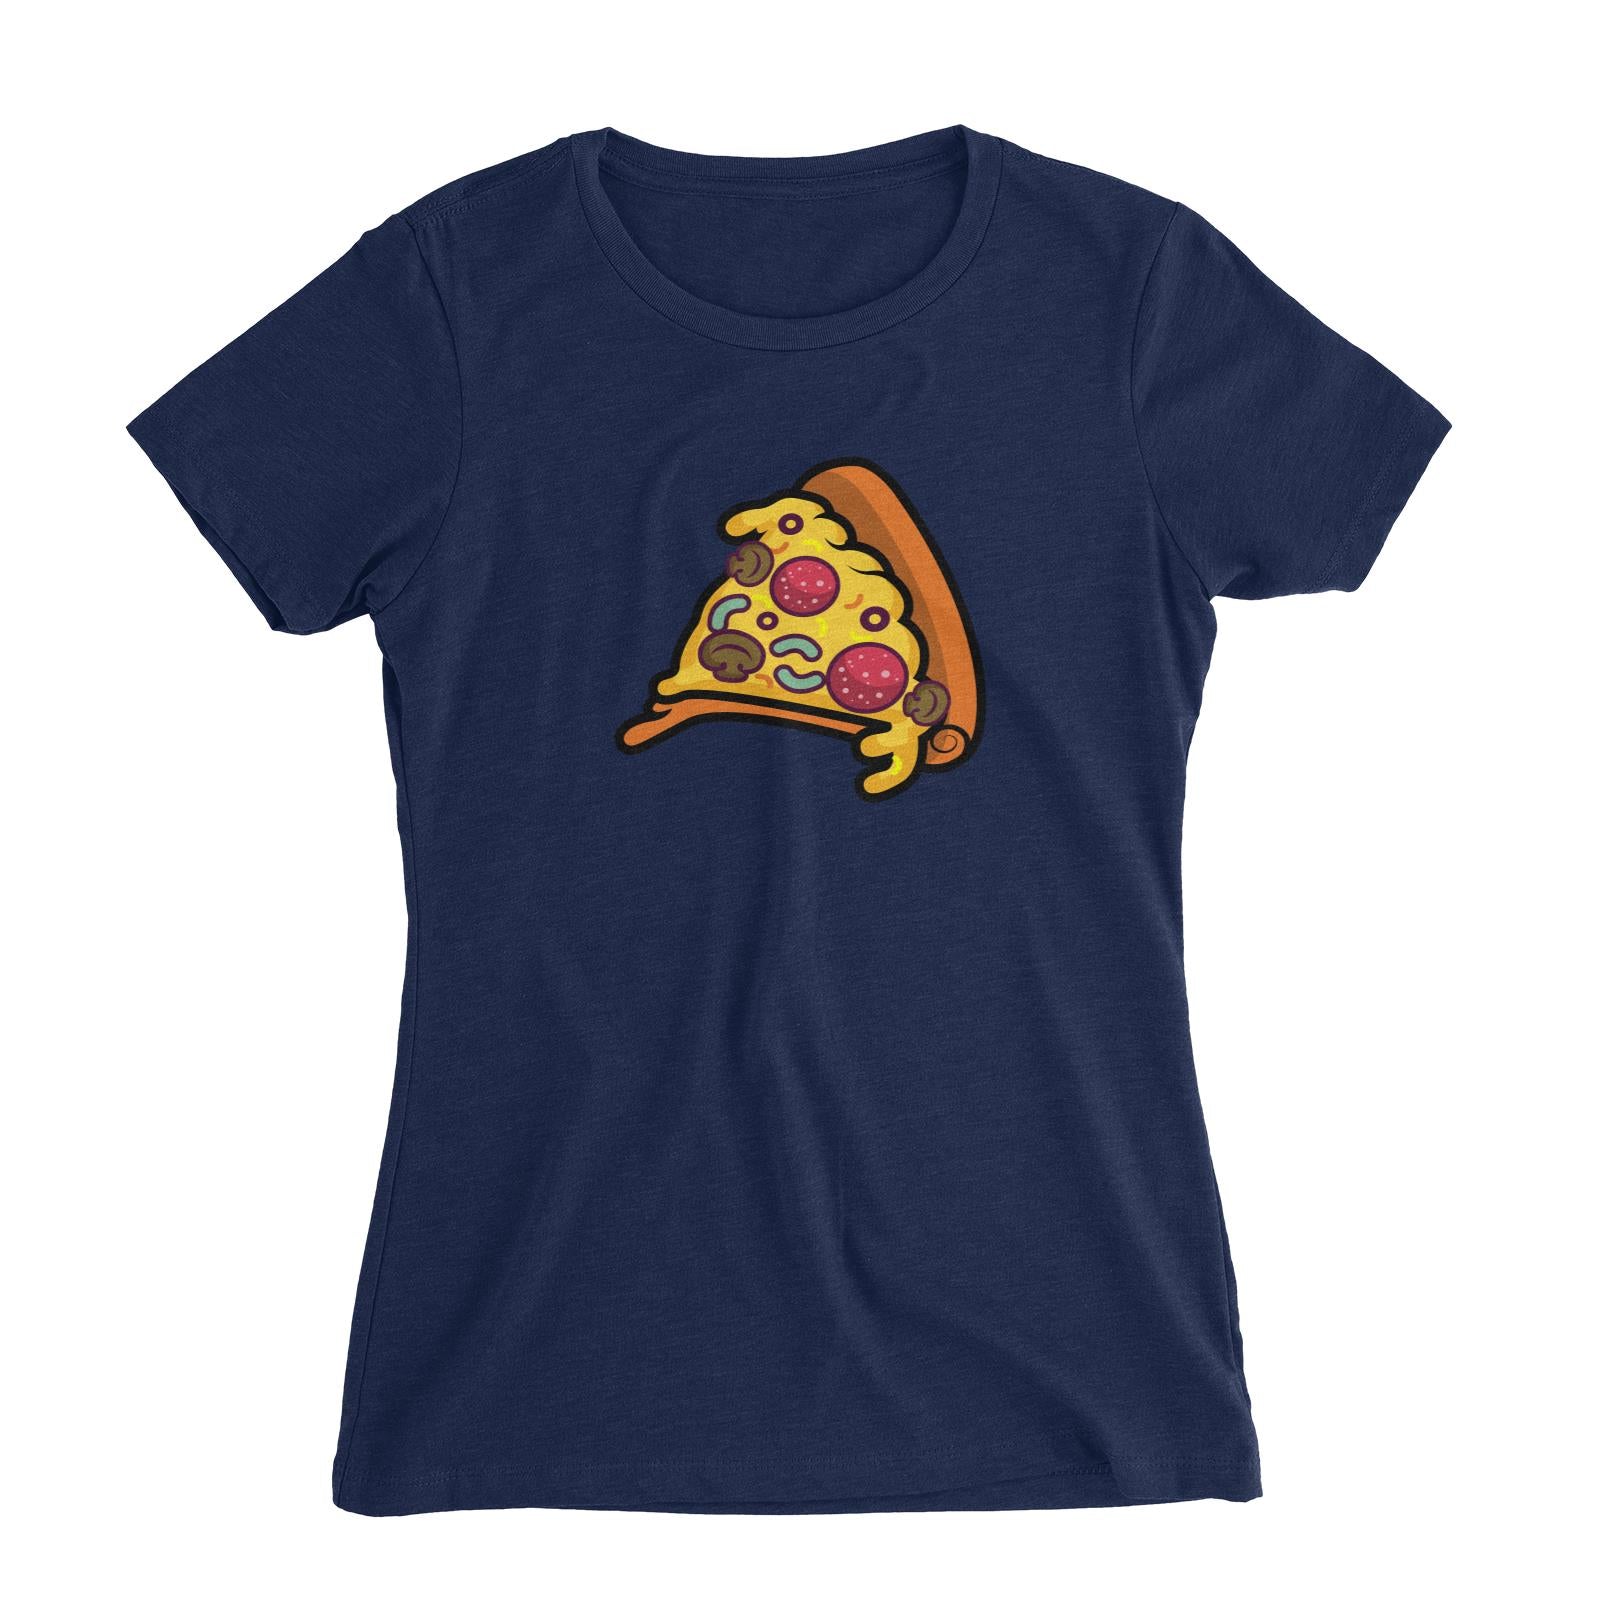 Fast Food Pizza Slice Women's Slim Fit T-Shirt  Matching Family Comic Cartoon